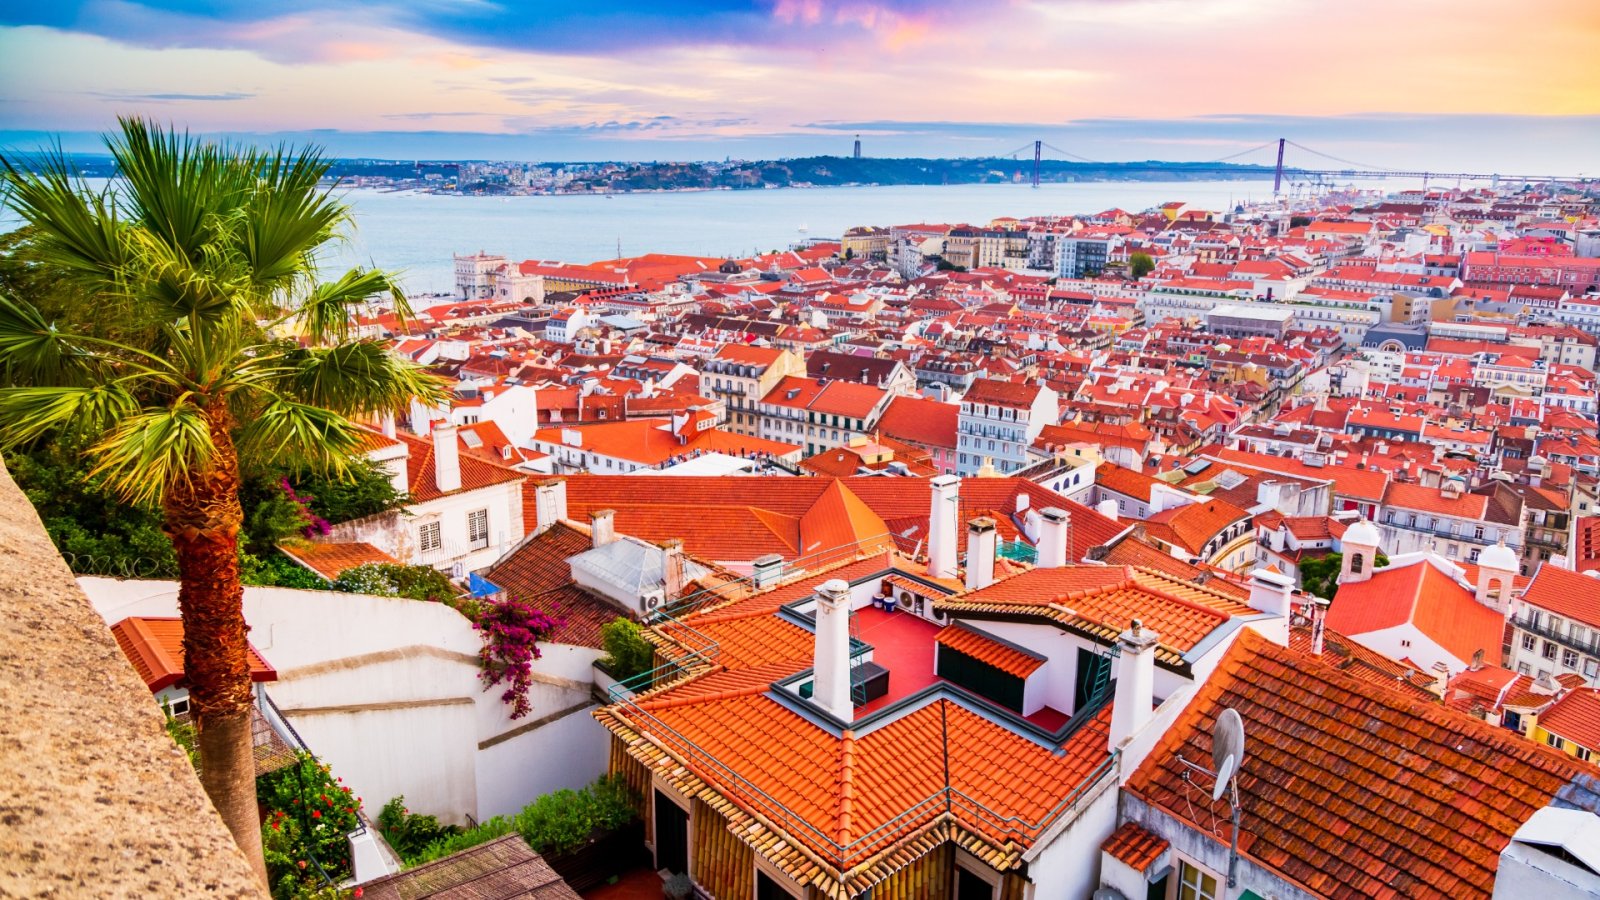 Lisbon: Europe's hidden gem of history, charm, and vibrance